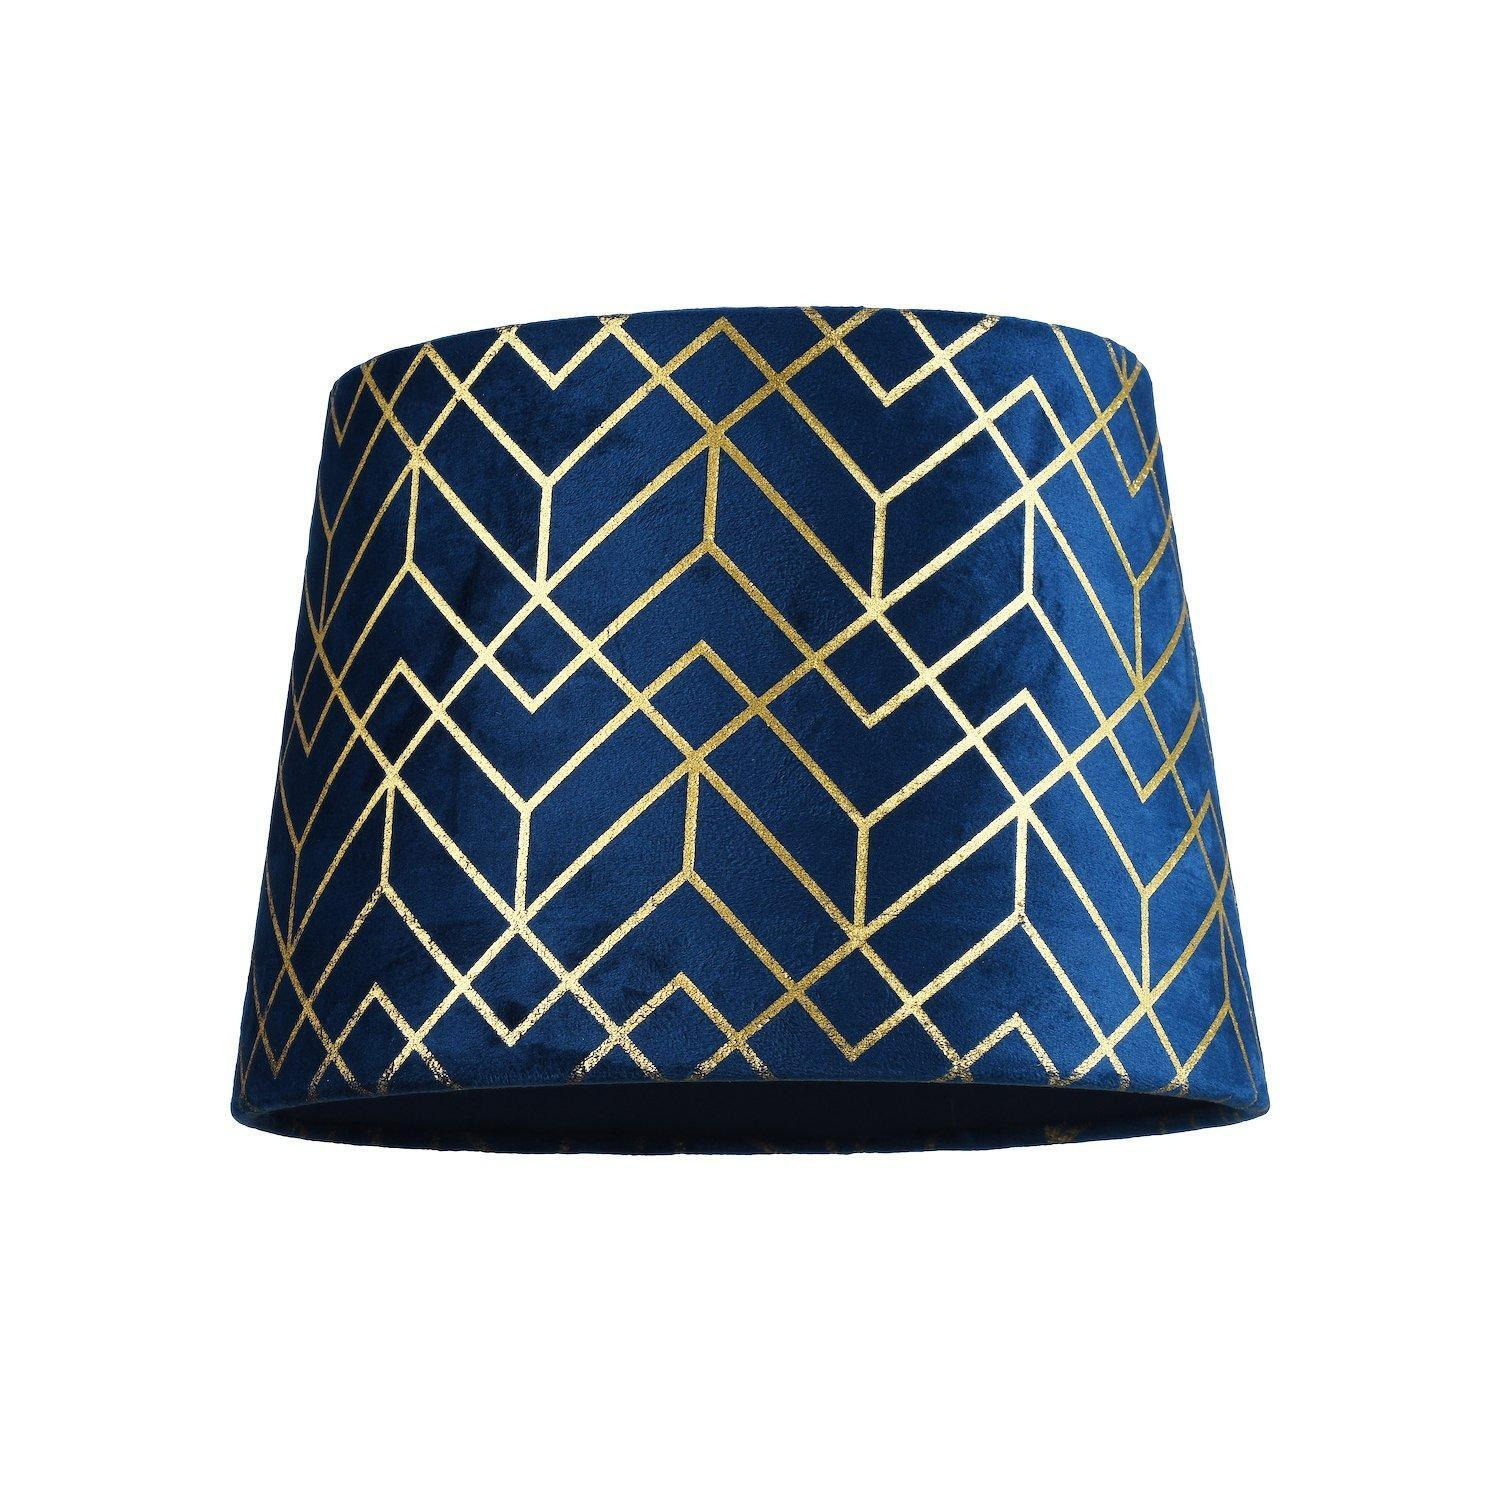 Navy Blue Velvet Lamp Shade with Geometric Design in Metallic Gold Foil Lines - image 1